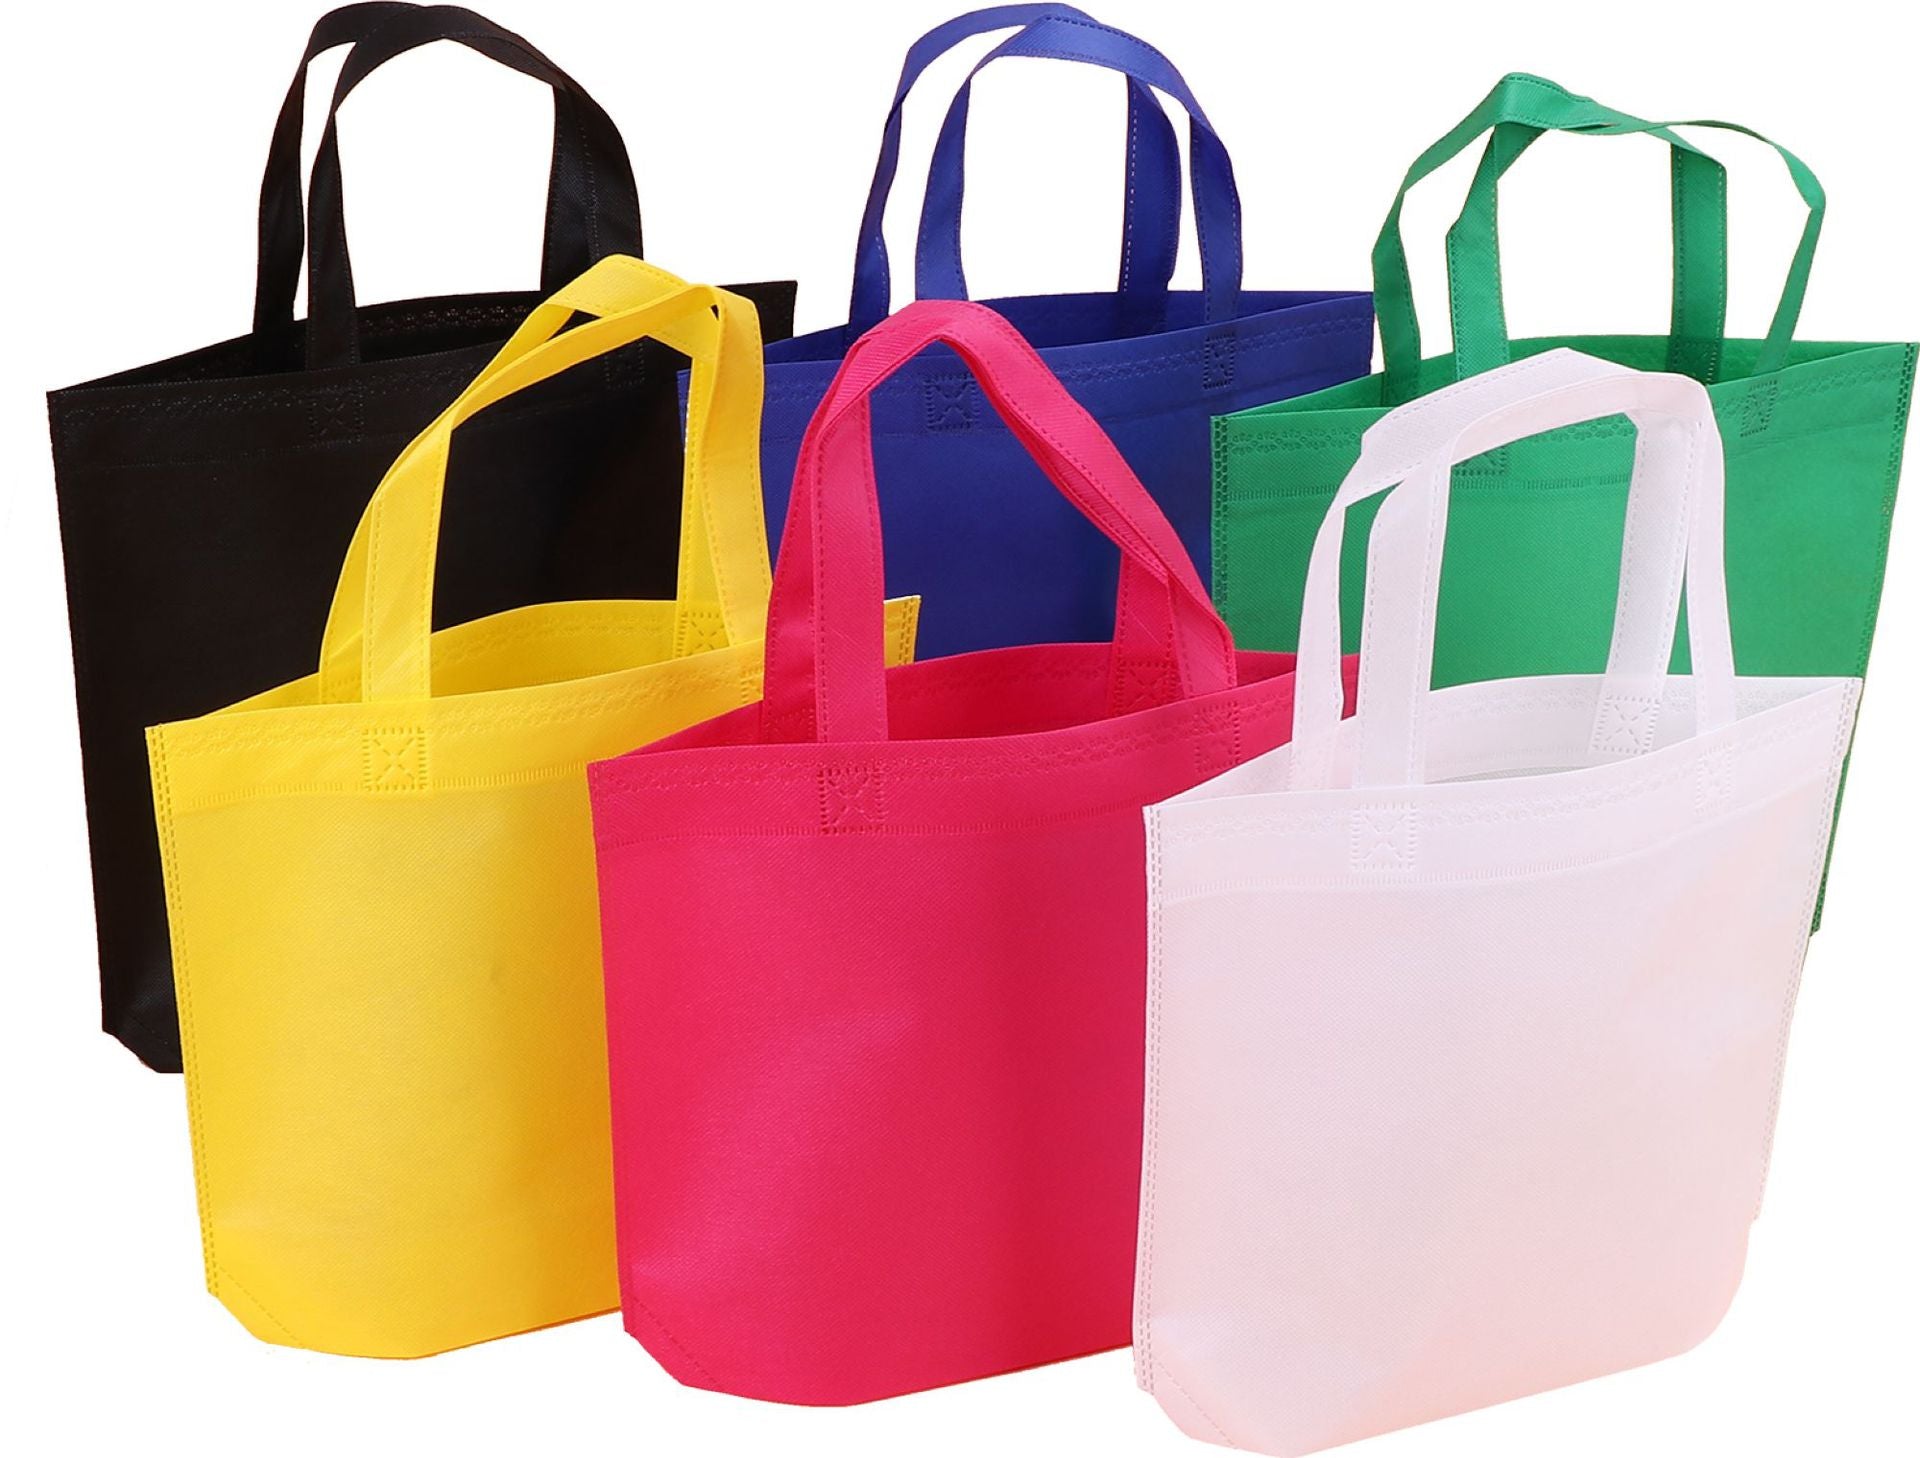 Non-Woven Bag - Slant Lily Bag 18" x 14" x 4"